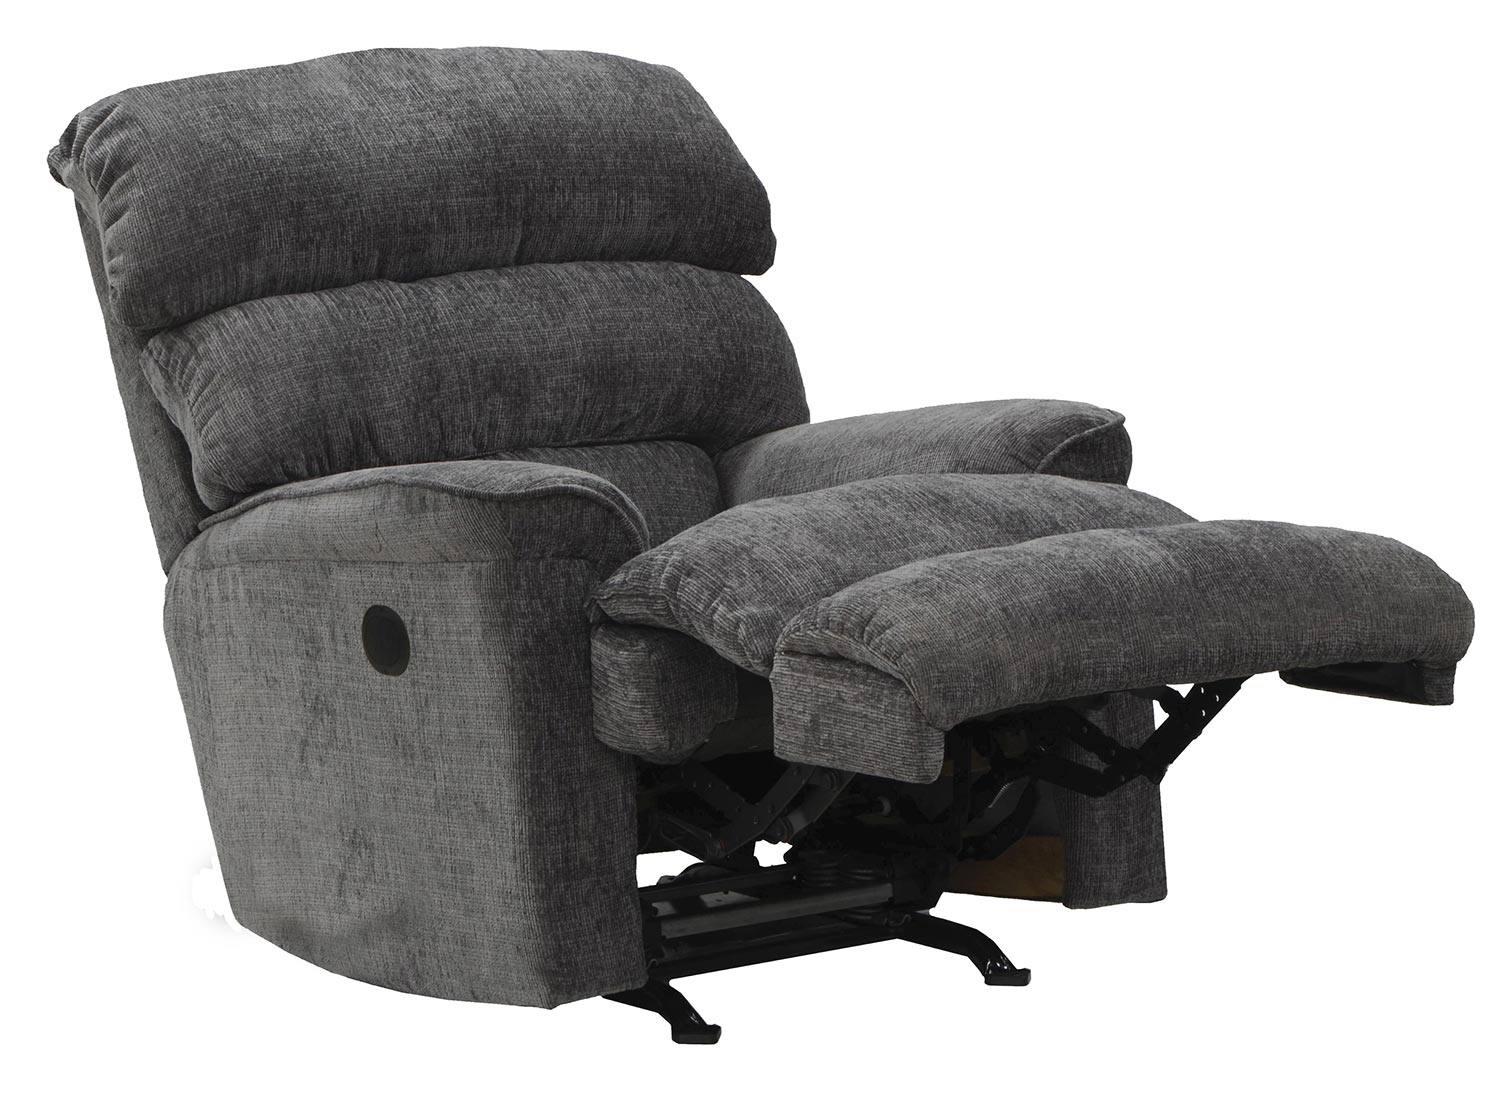 CatNapper Pearson Rocker Recliner Chair - Charcoal